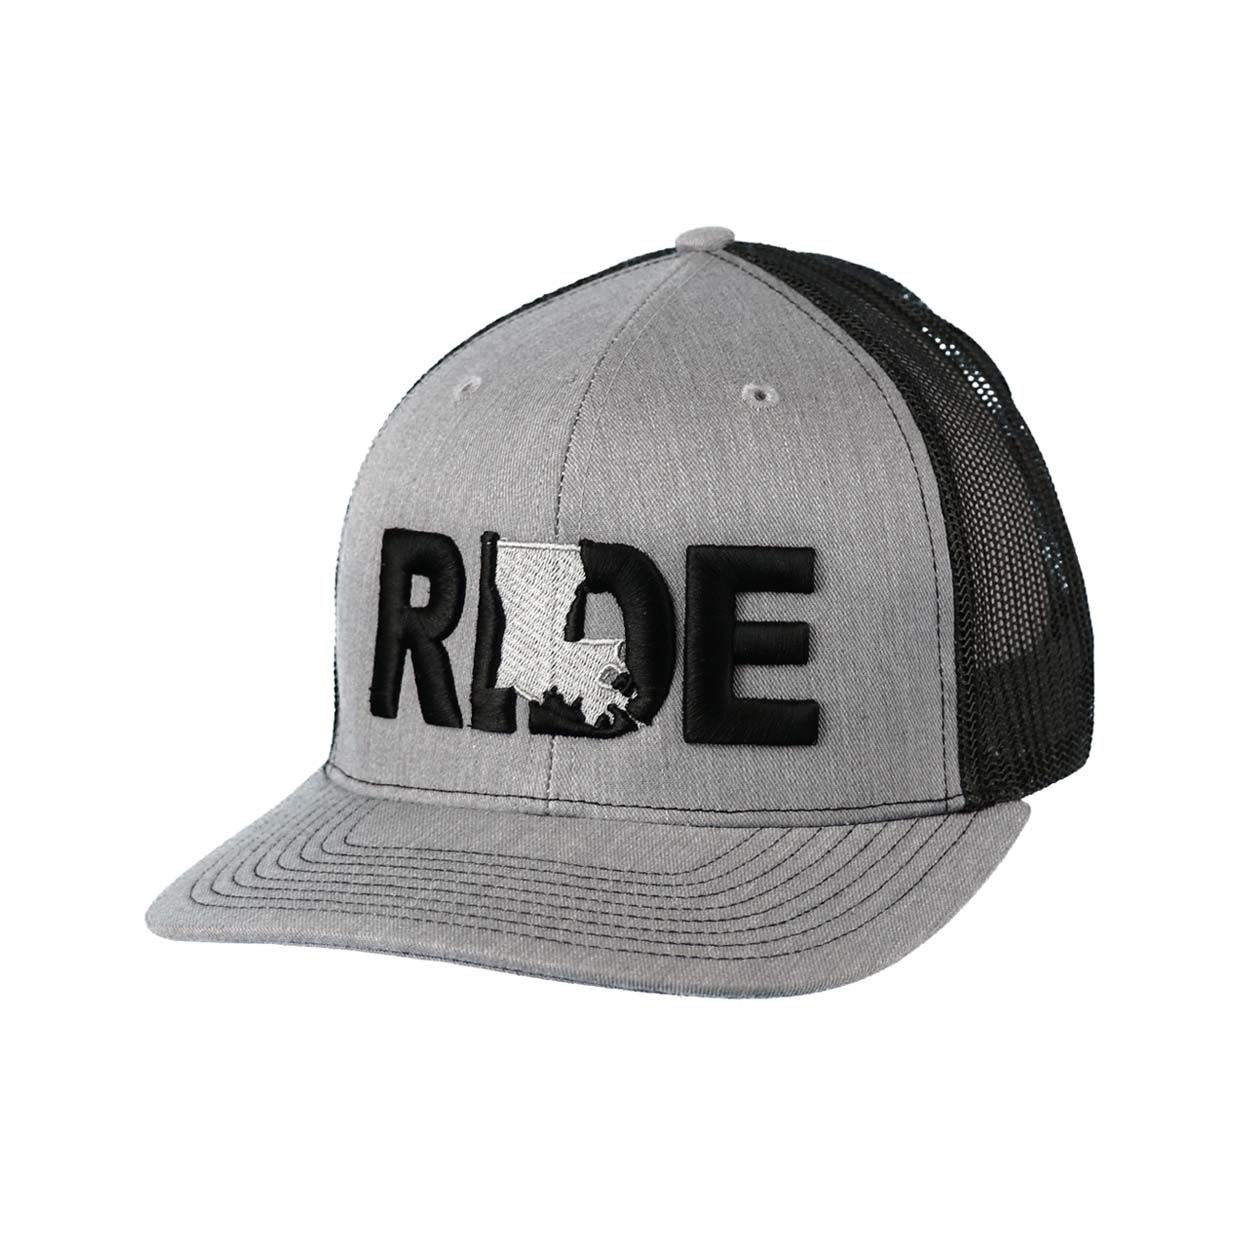 Ride Louisiana Classic Pro 3D Puff Embroidered Snapback Trucker Hat Heather Gray/Black